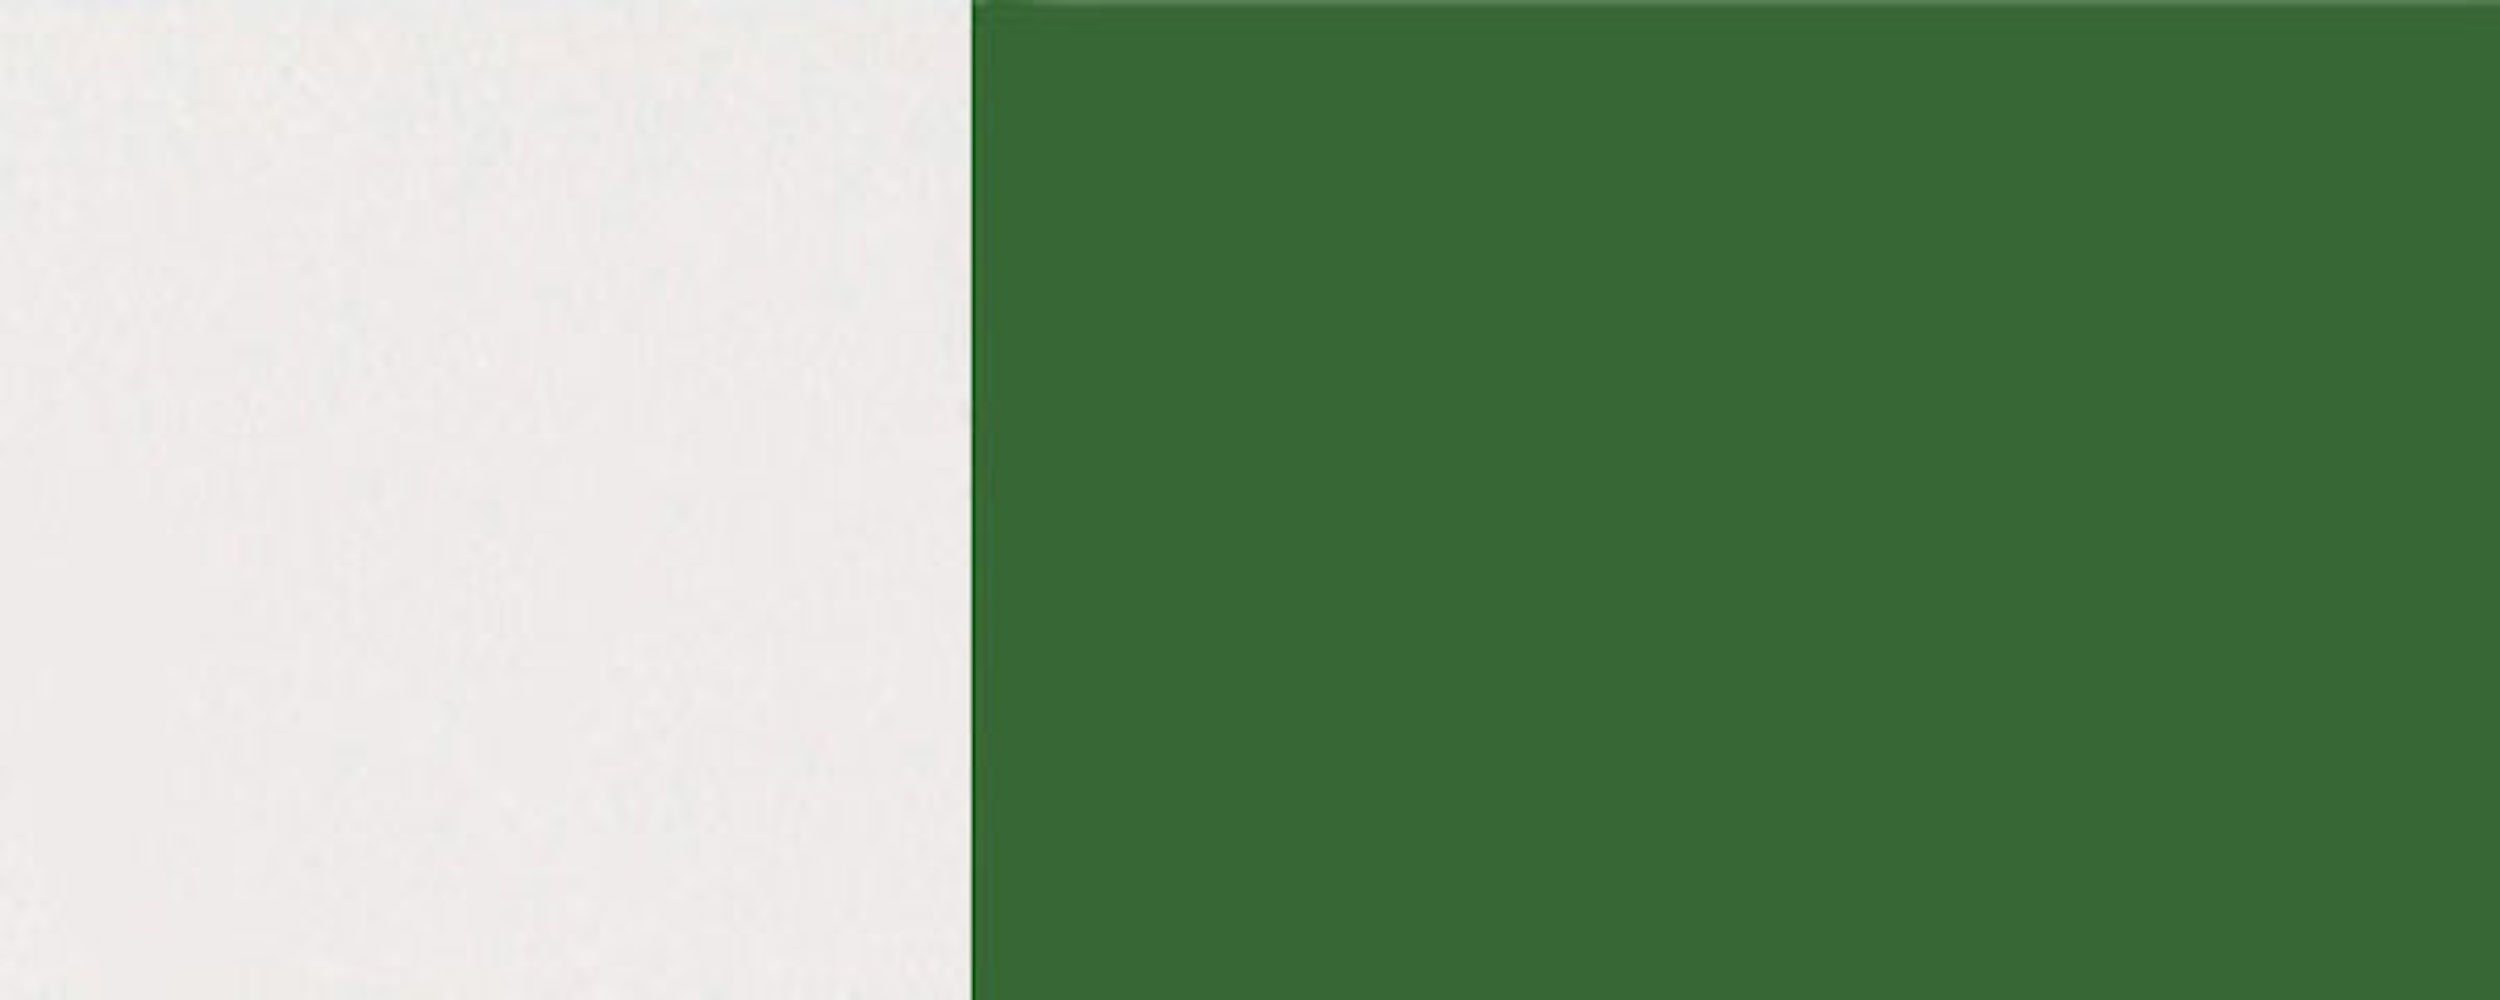 Feldmann-Wohnen Klapphängeschrank Florence und Front-, RAL smaragdgrün 6001 Korpusfarbe Hochglanz (Florence) Ausführung grifflos 60cm 1-türig wählbar